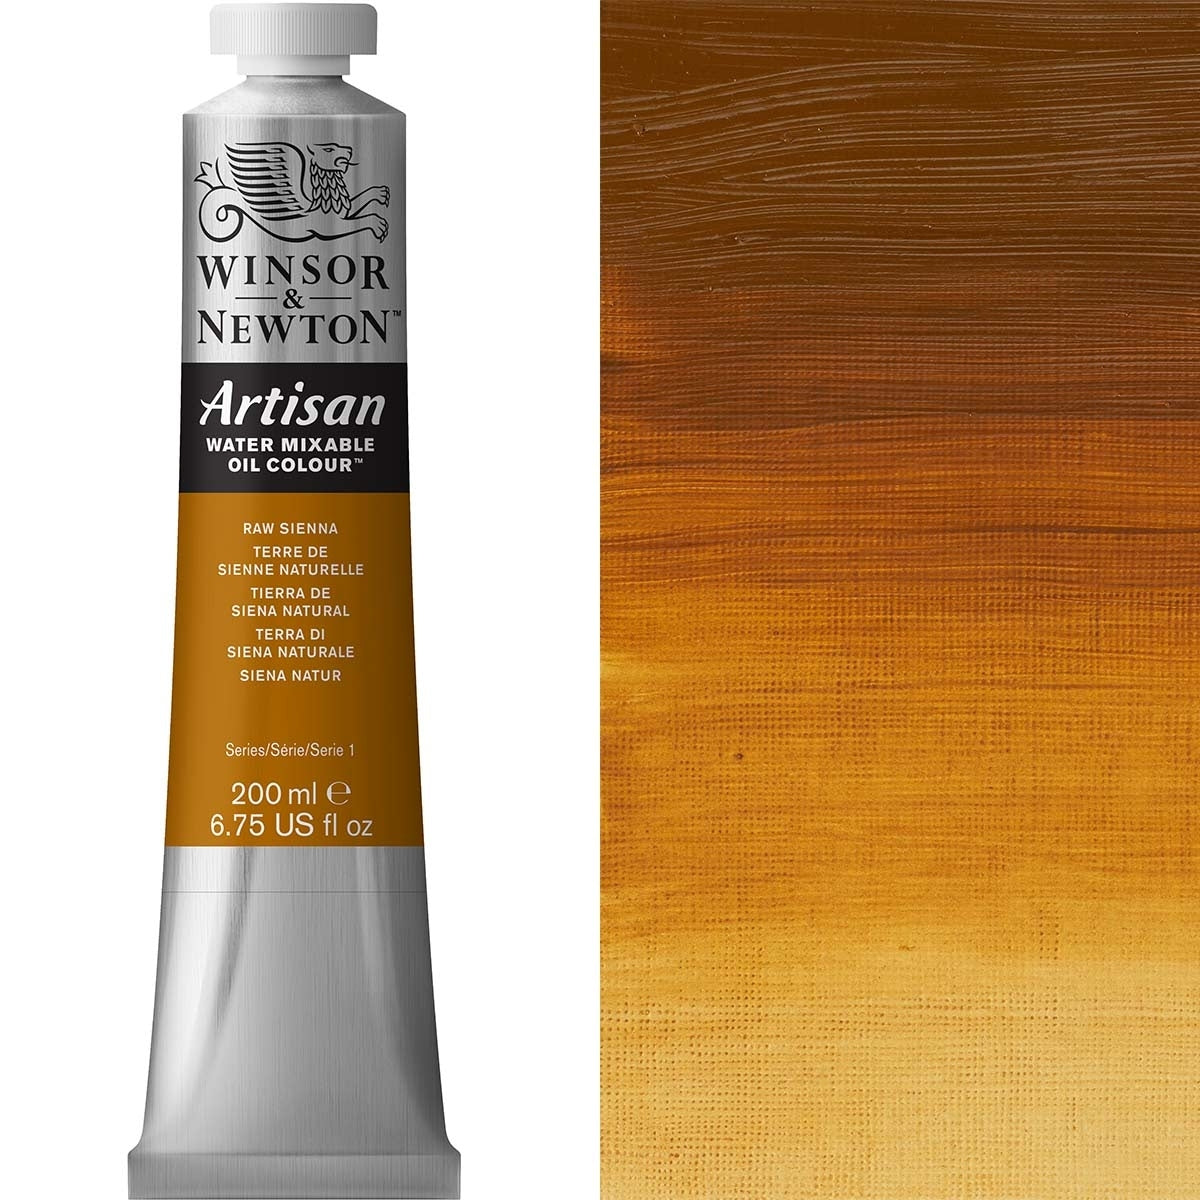 Winsor and Newton - Artisan Oil Colour Watermixable - 200ml - Raw Sienna